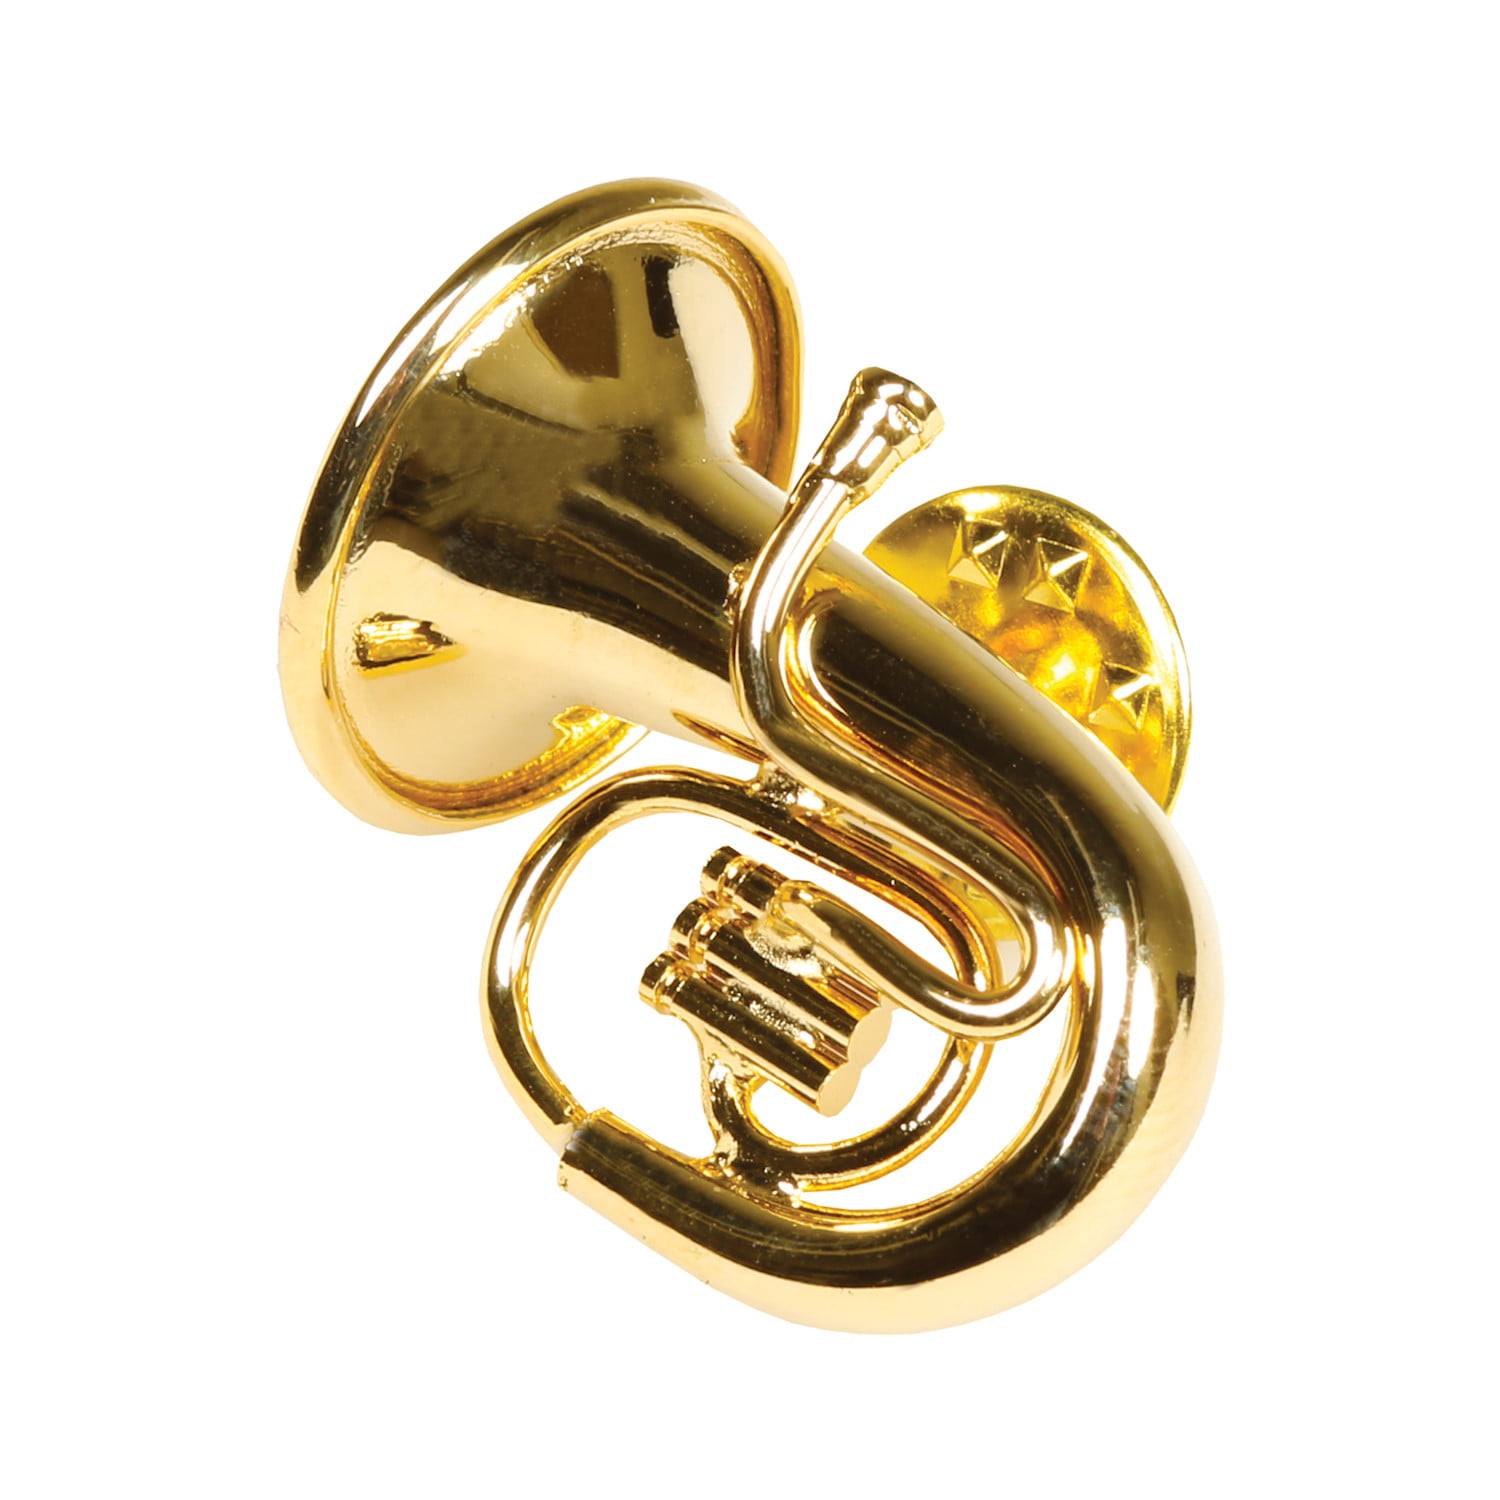 Euphonium Tuba Tie Clip with Matching lapel pin badge